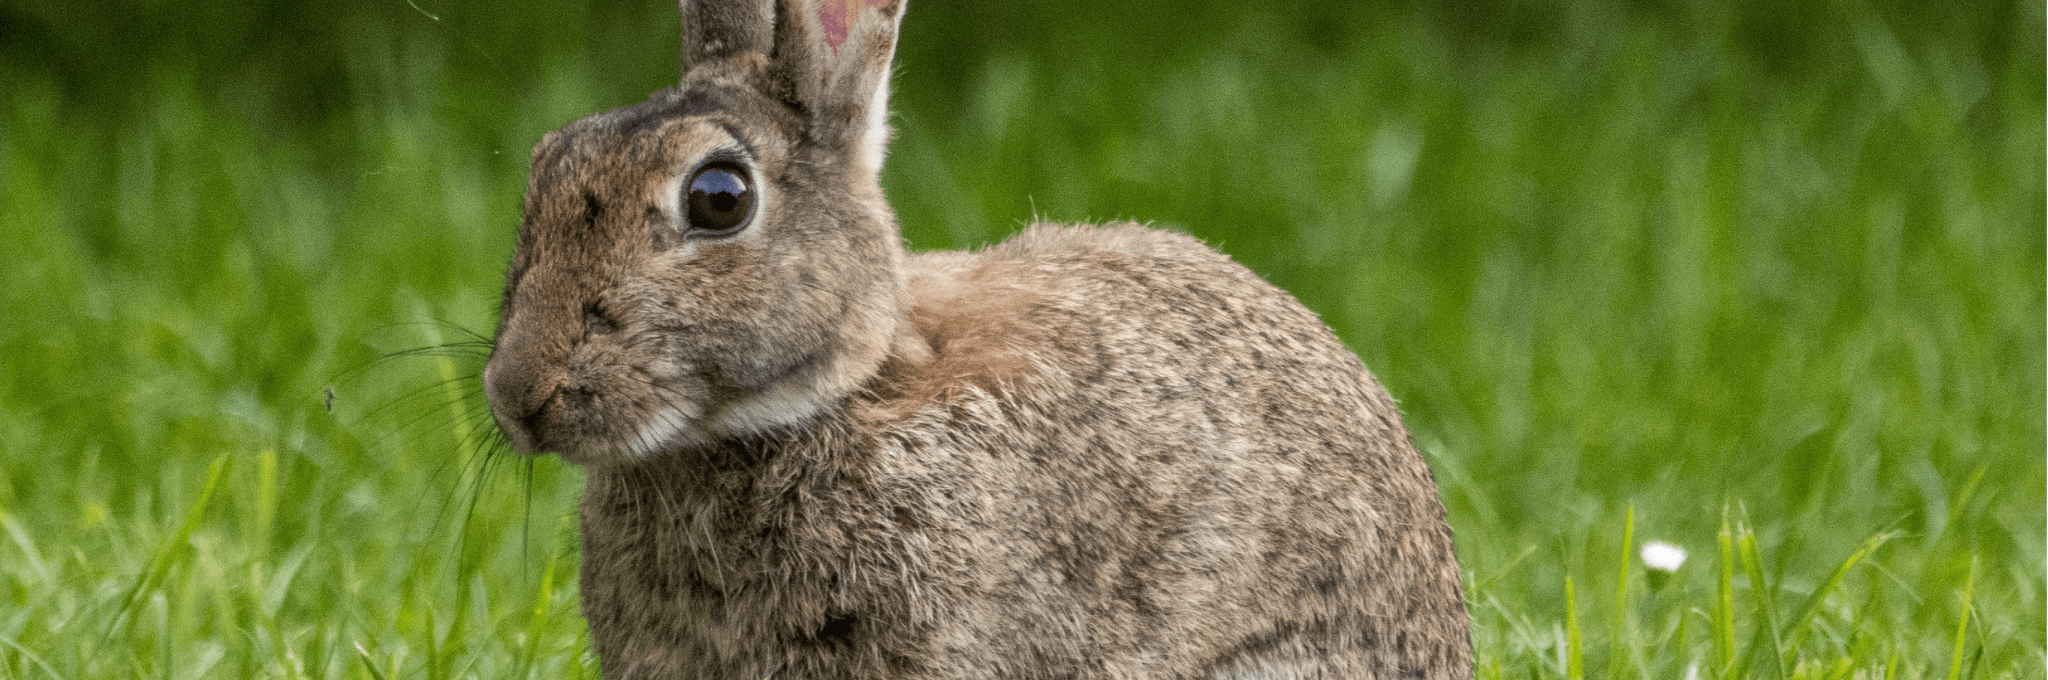 Predator Guard gray rabbit in grass